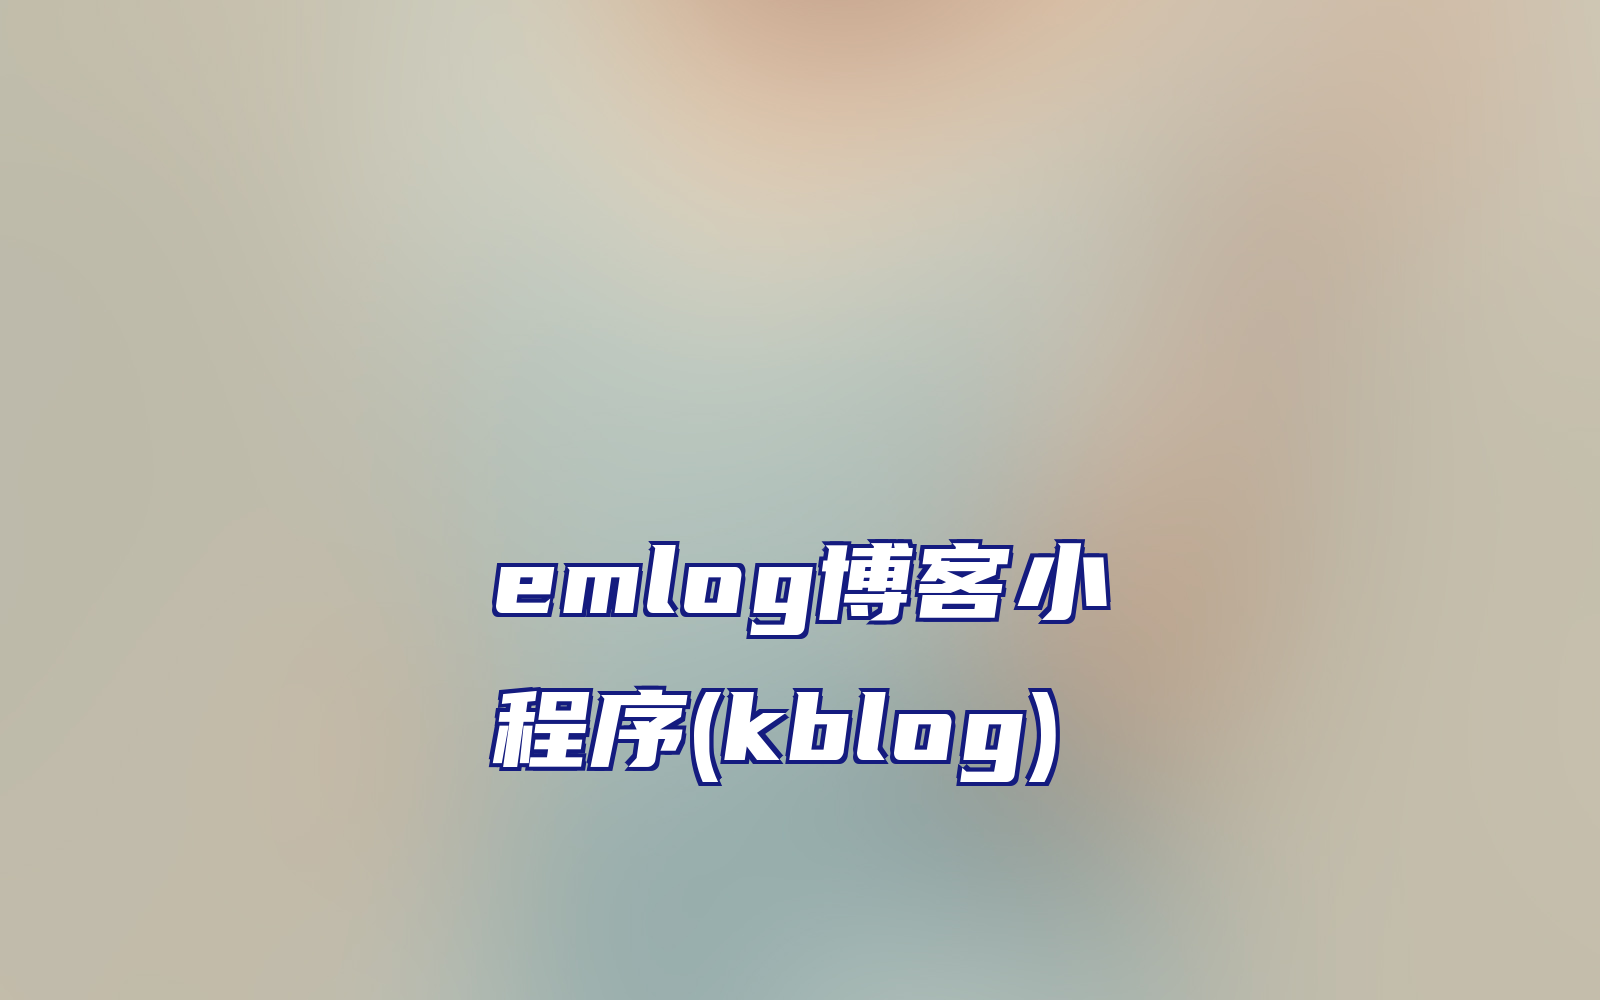 emlog博客小程序(kblog)